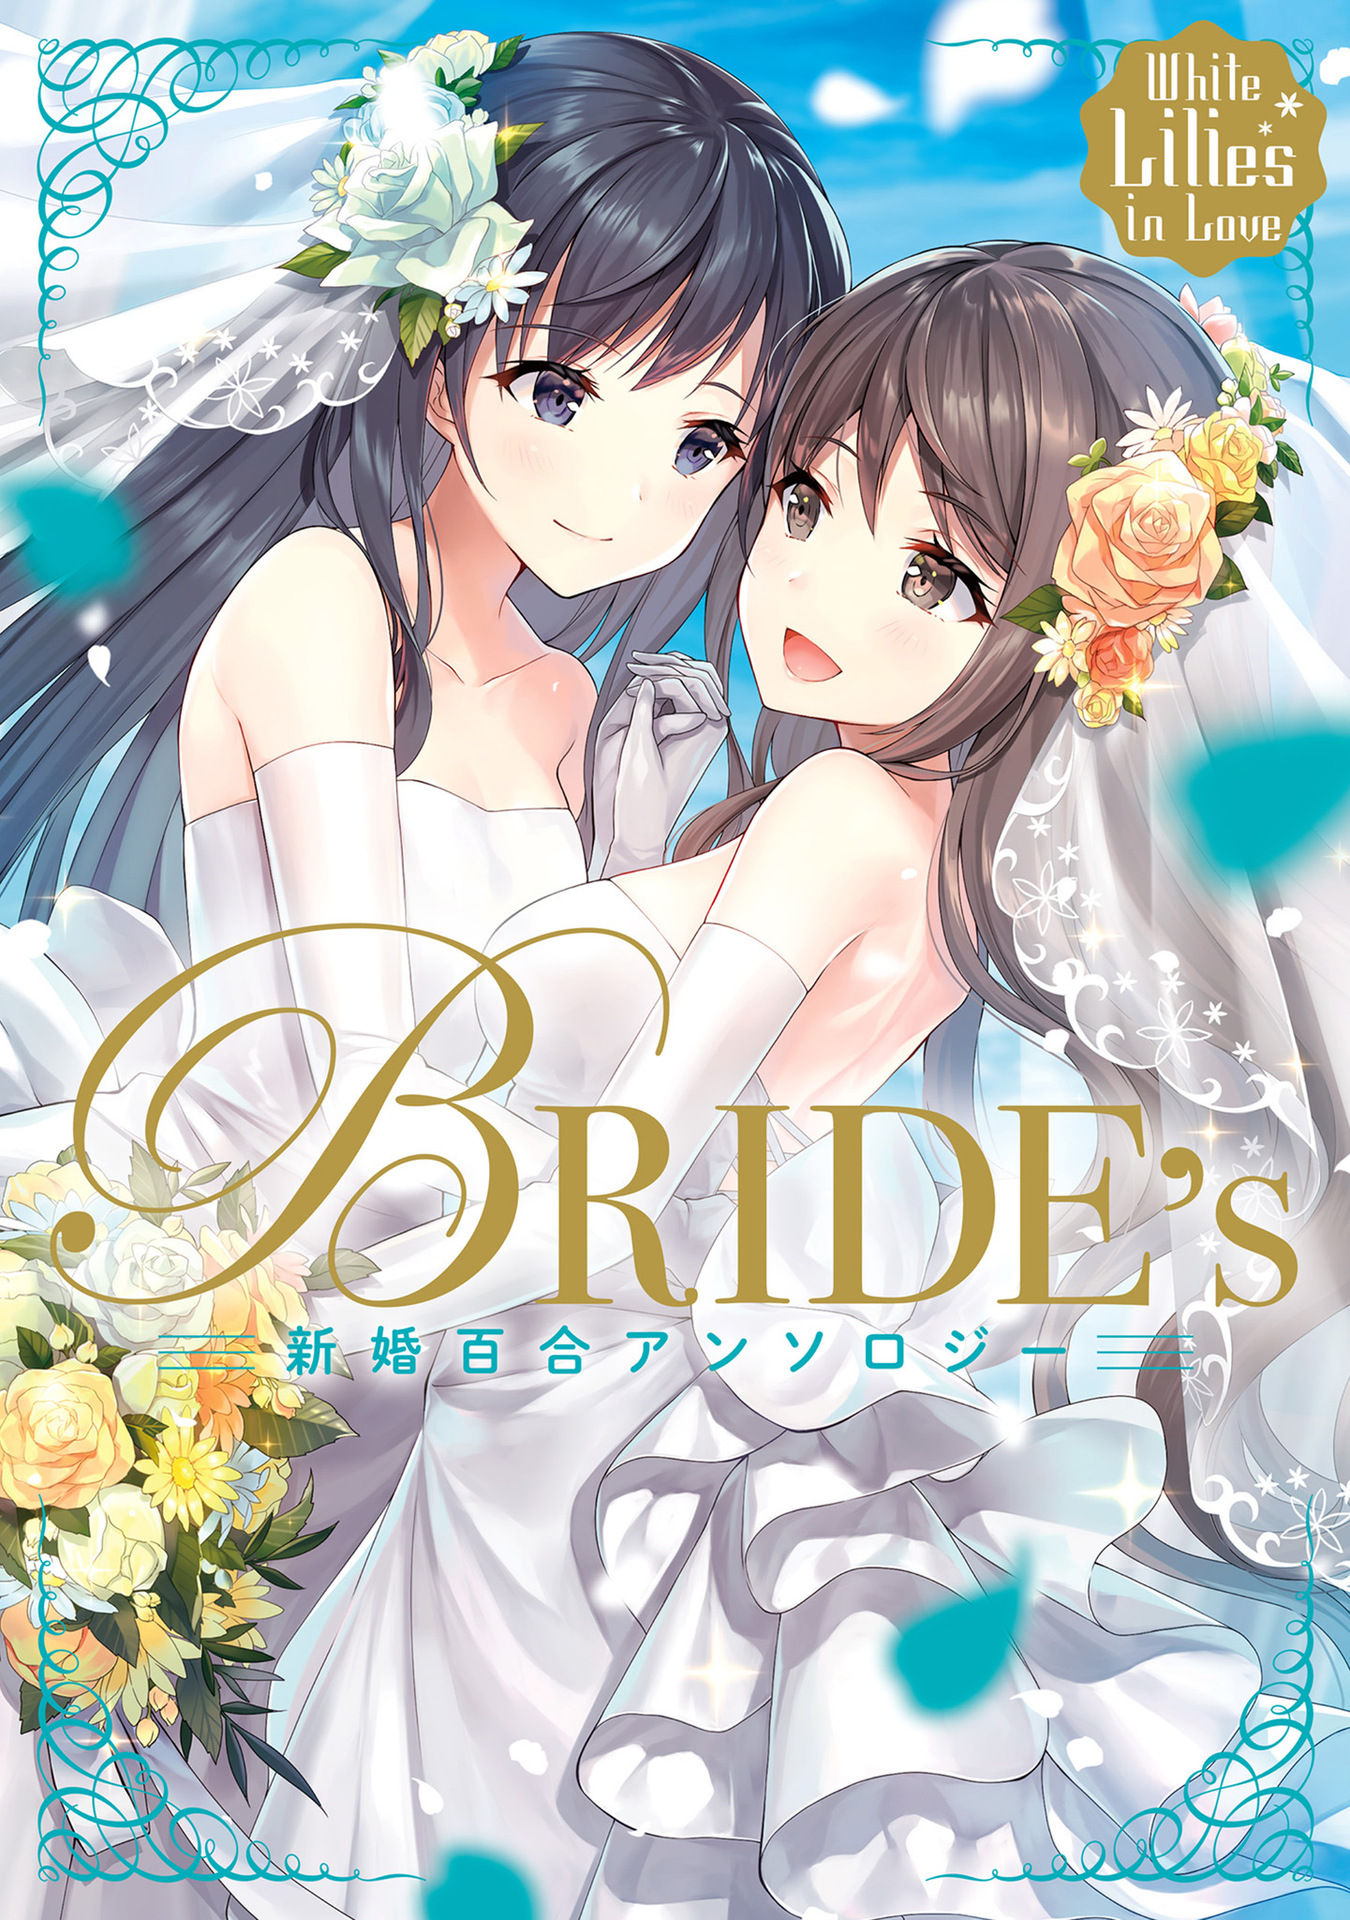 White Lilies in Love - BRIDEs Newlywed Yuri Anthology